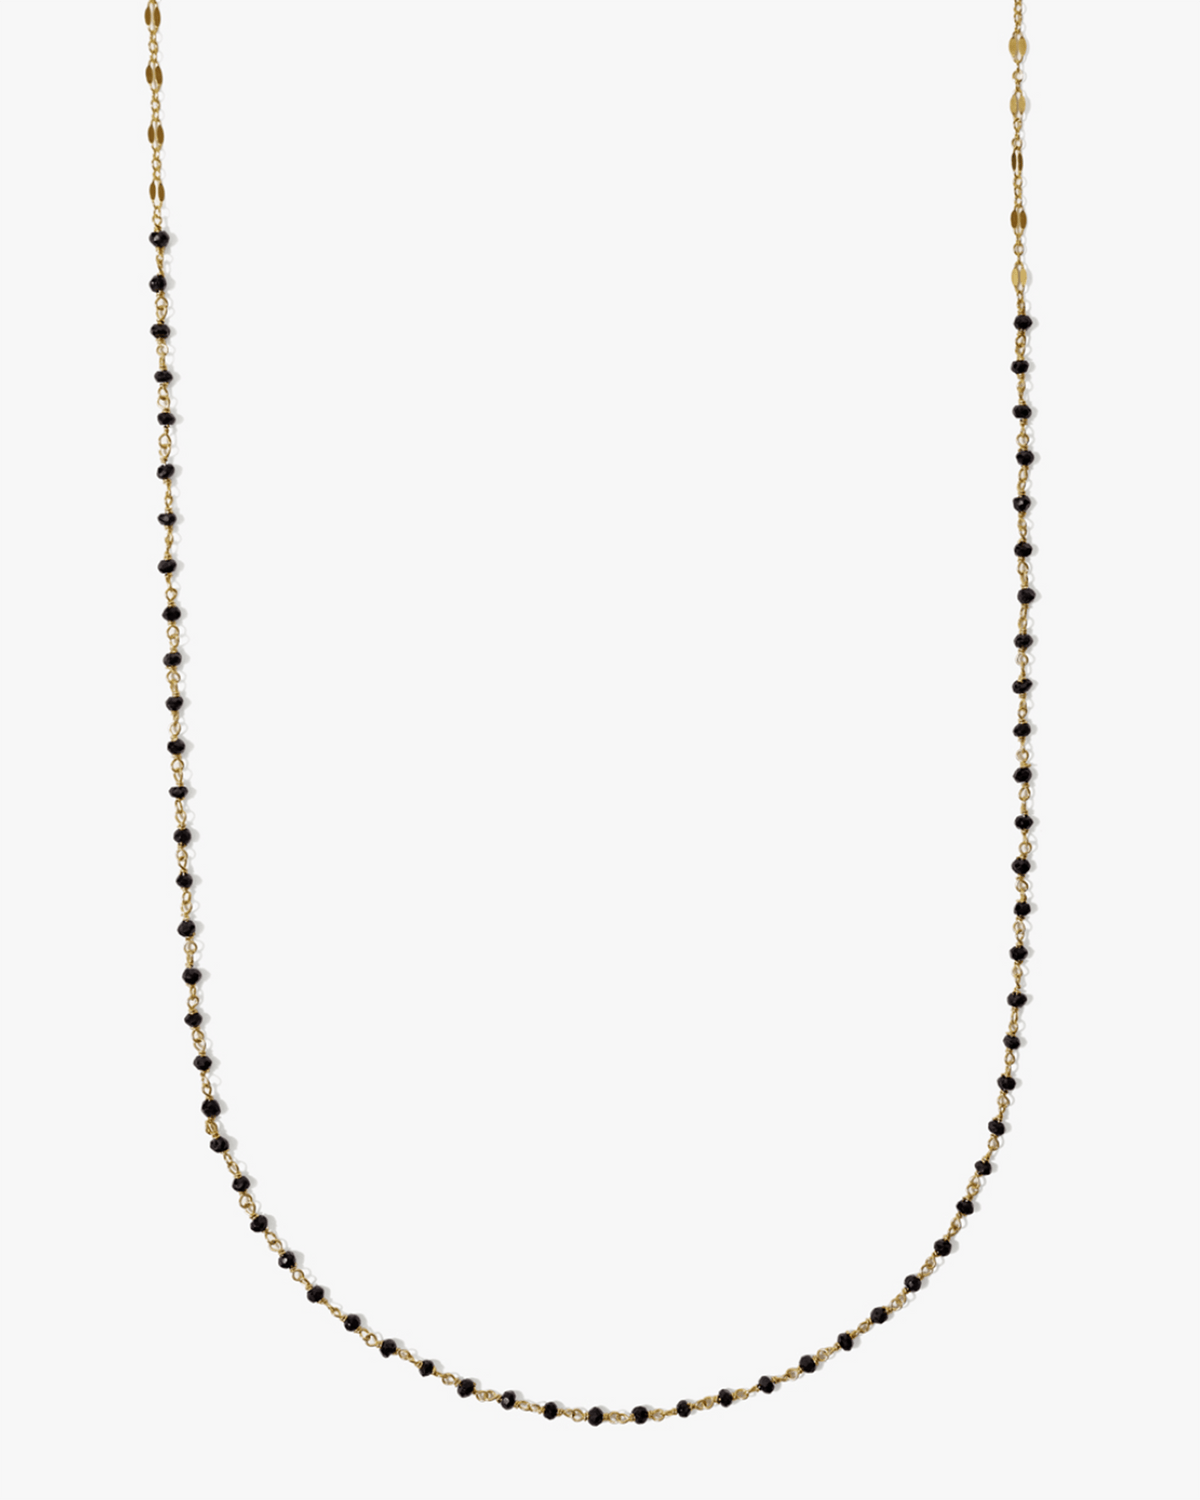 Chan Luu Jewelry Black Garnet/Gold 32" Wire Wrap Bead Necklace in Black Garnet w/ Gold